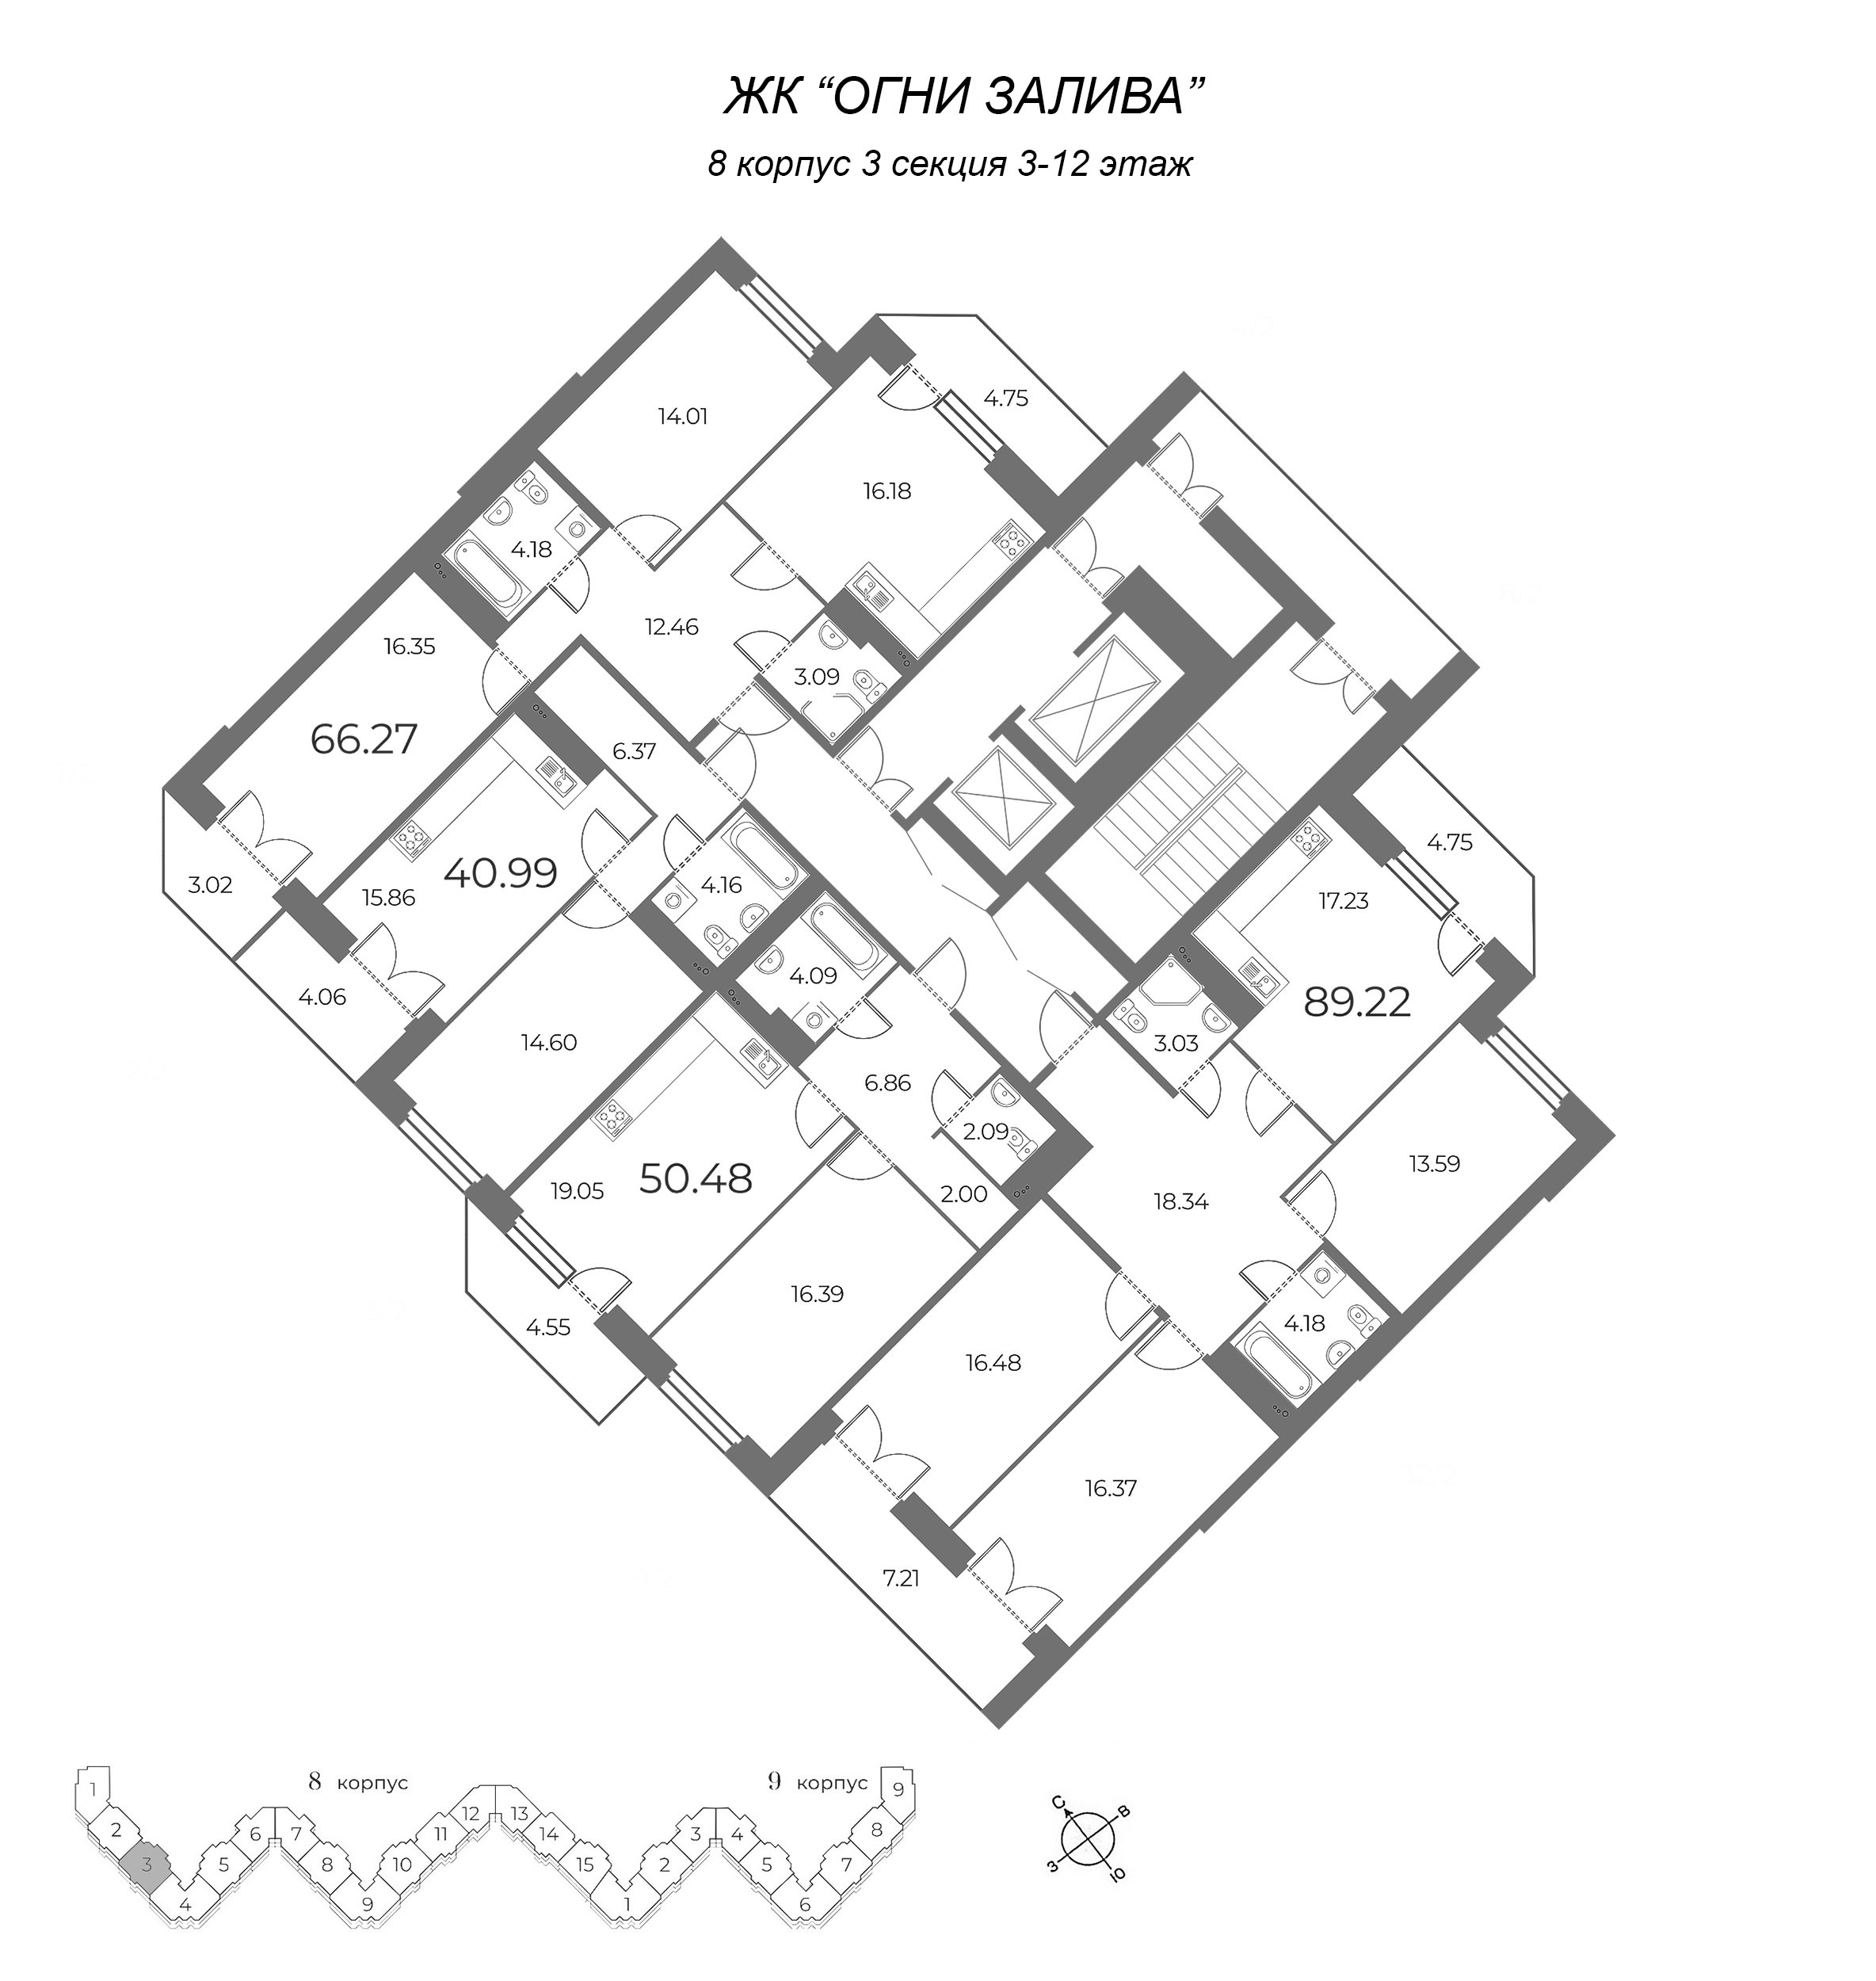 2-комнатная (Евро) квартира, 51.84 м² - планировка этажа